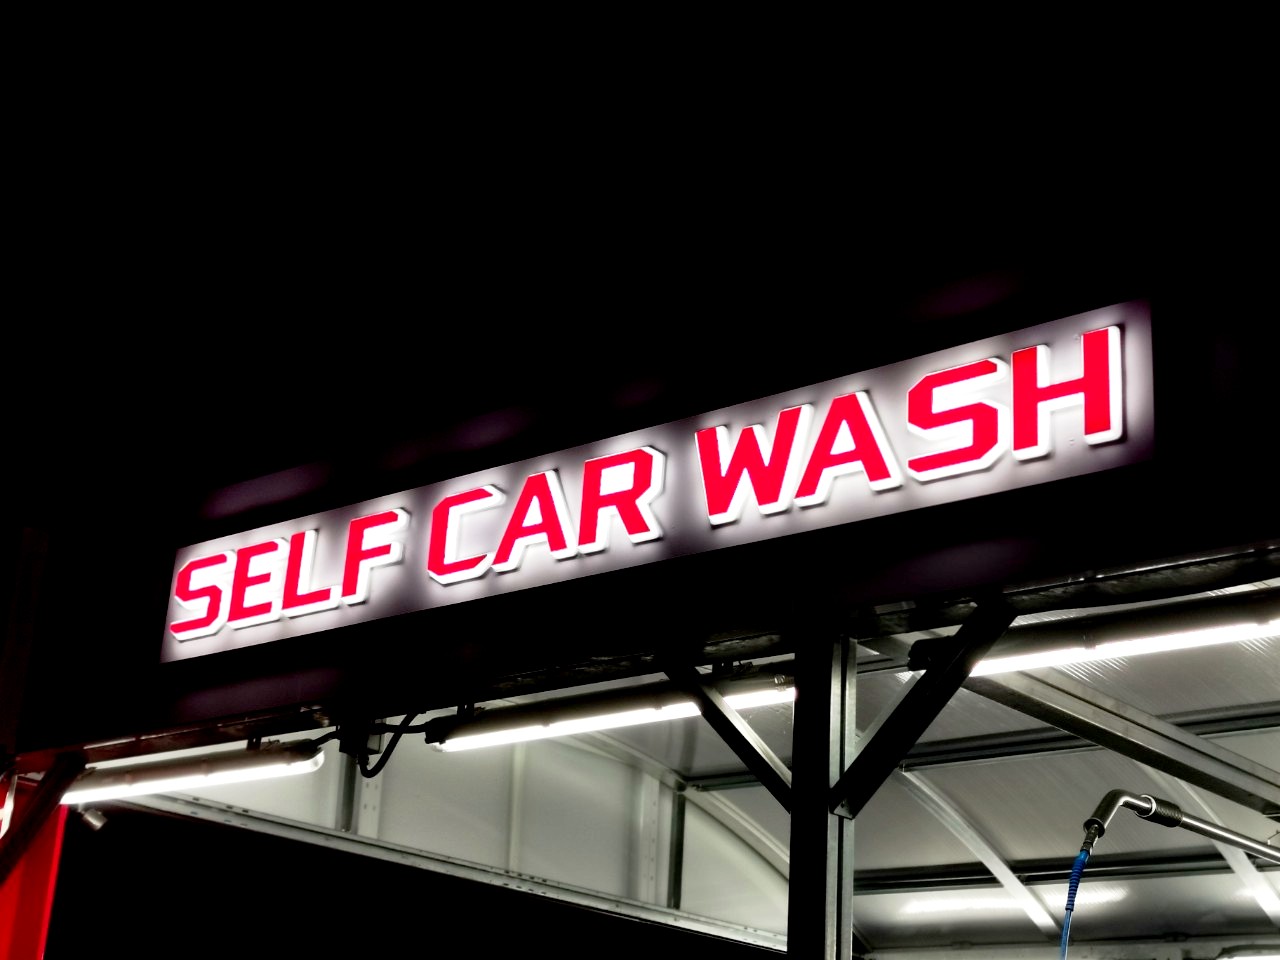 09-self-car-wash